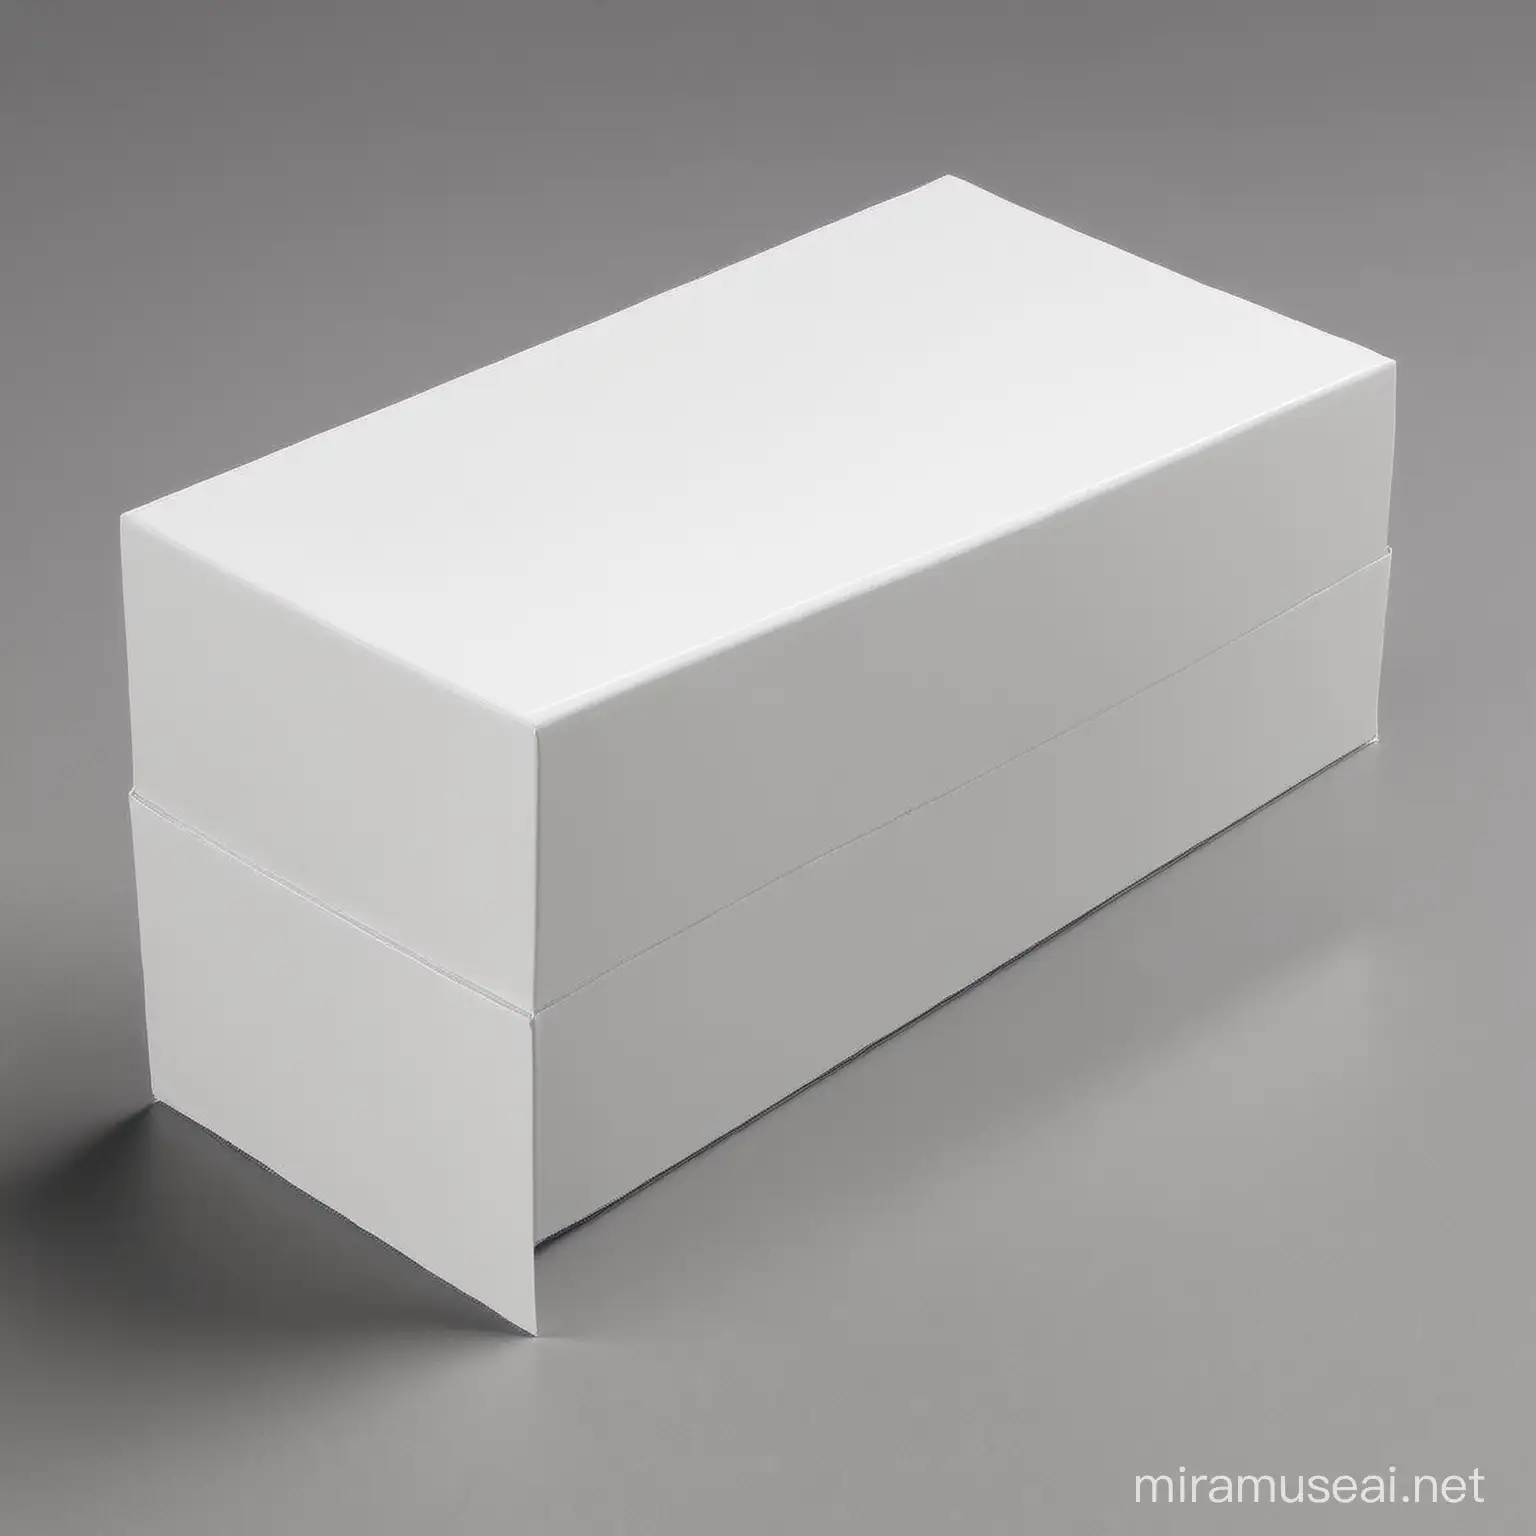 blank rectangular white box